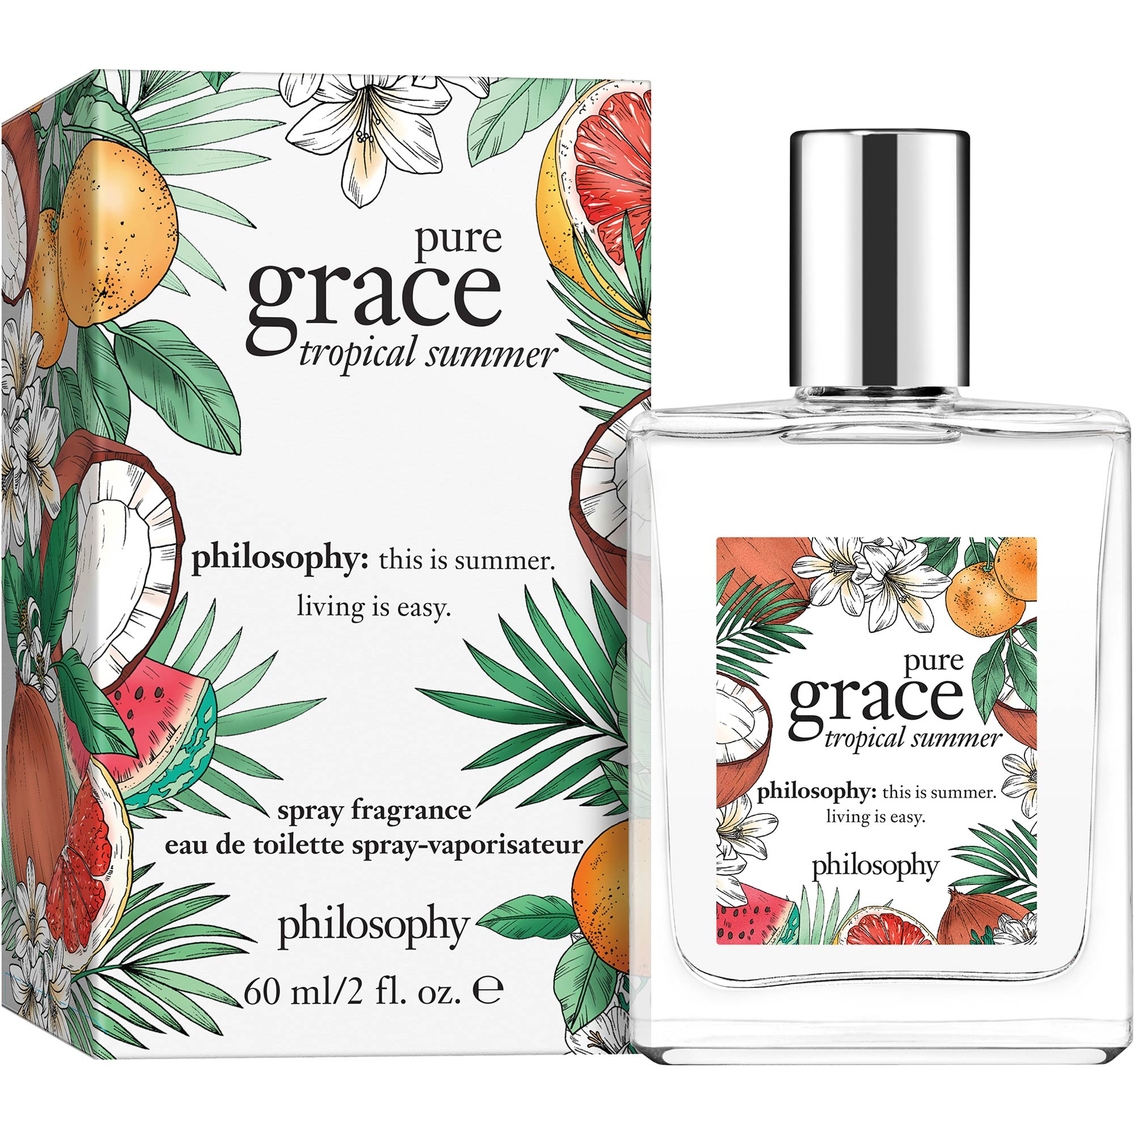 Pure Grace Desert Summer by Philosophy Eau de Toilette Spray 4 oz (women)